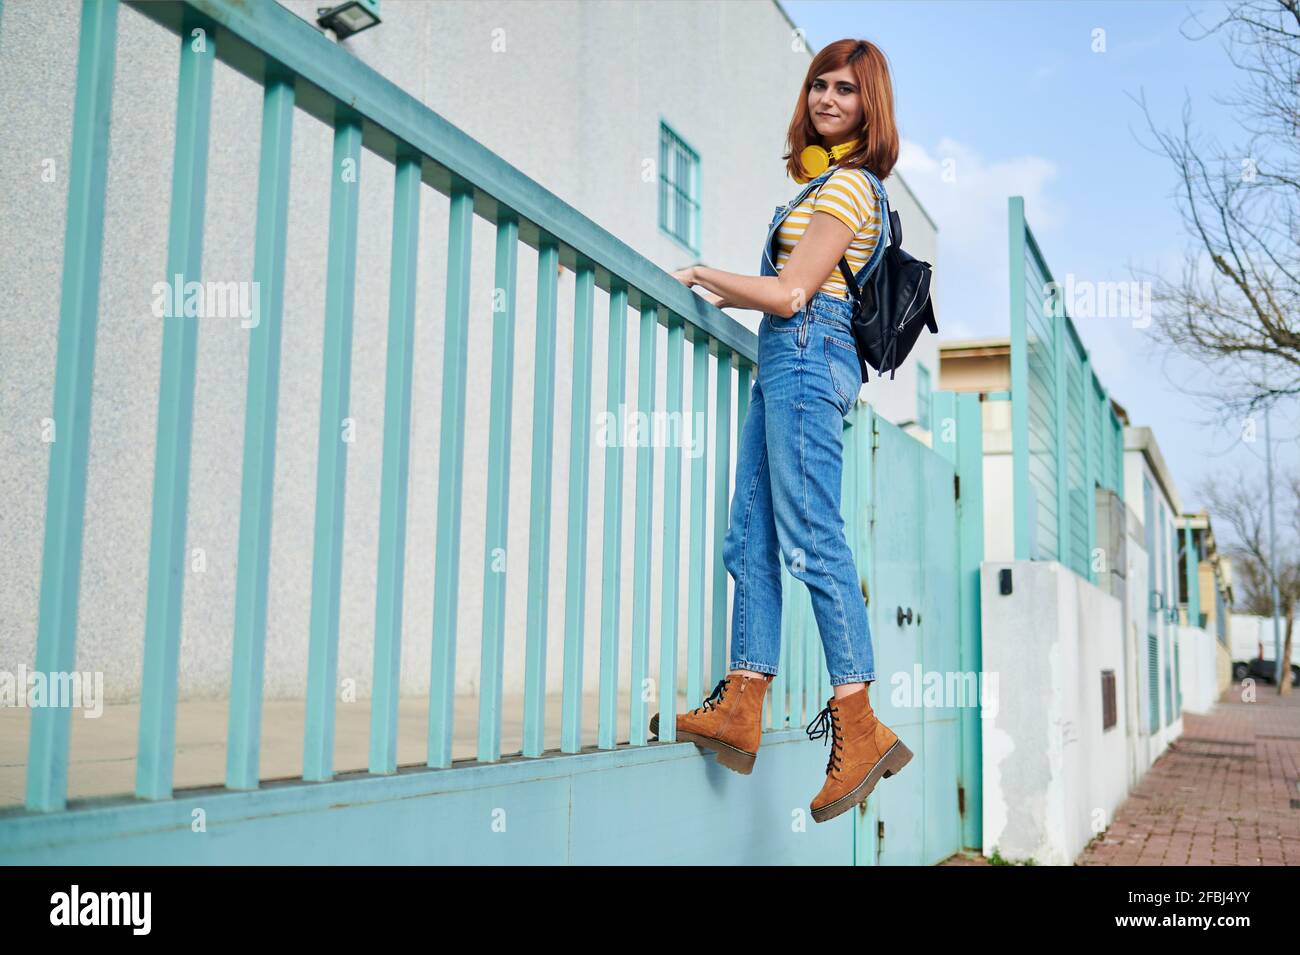 Redhead woman in bib overall climbing on turquoise blue railing Stock Photo